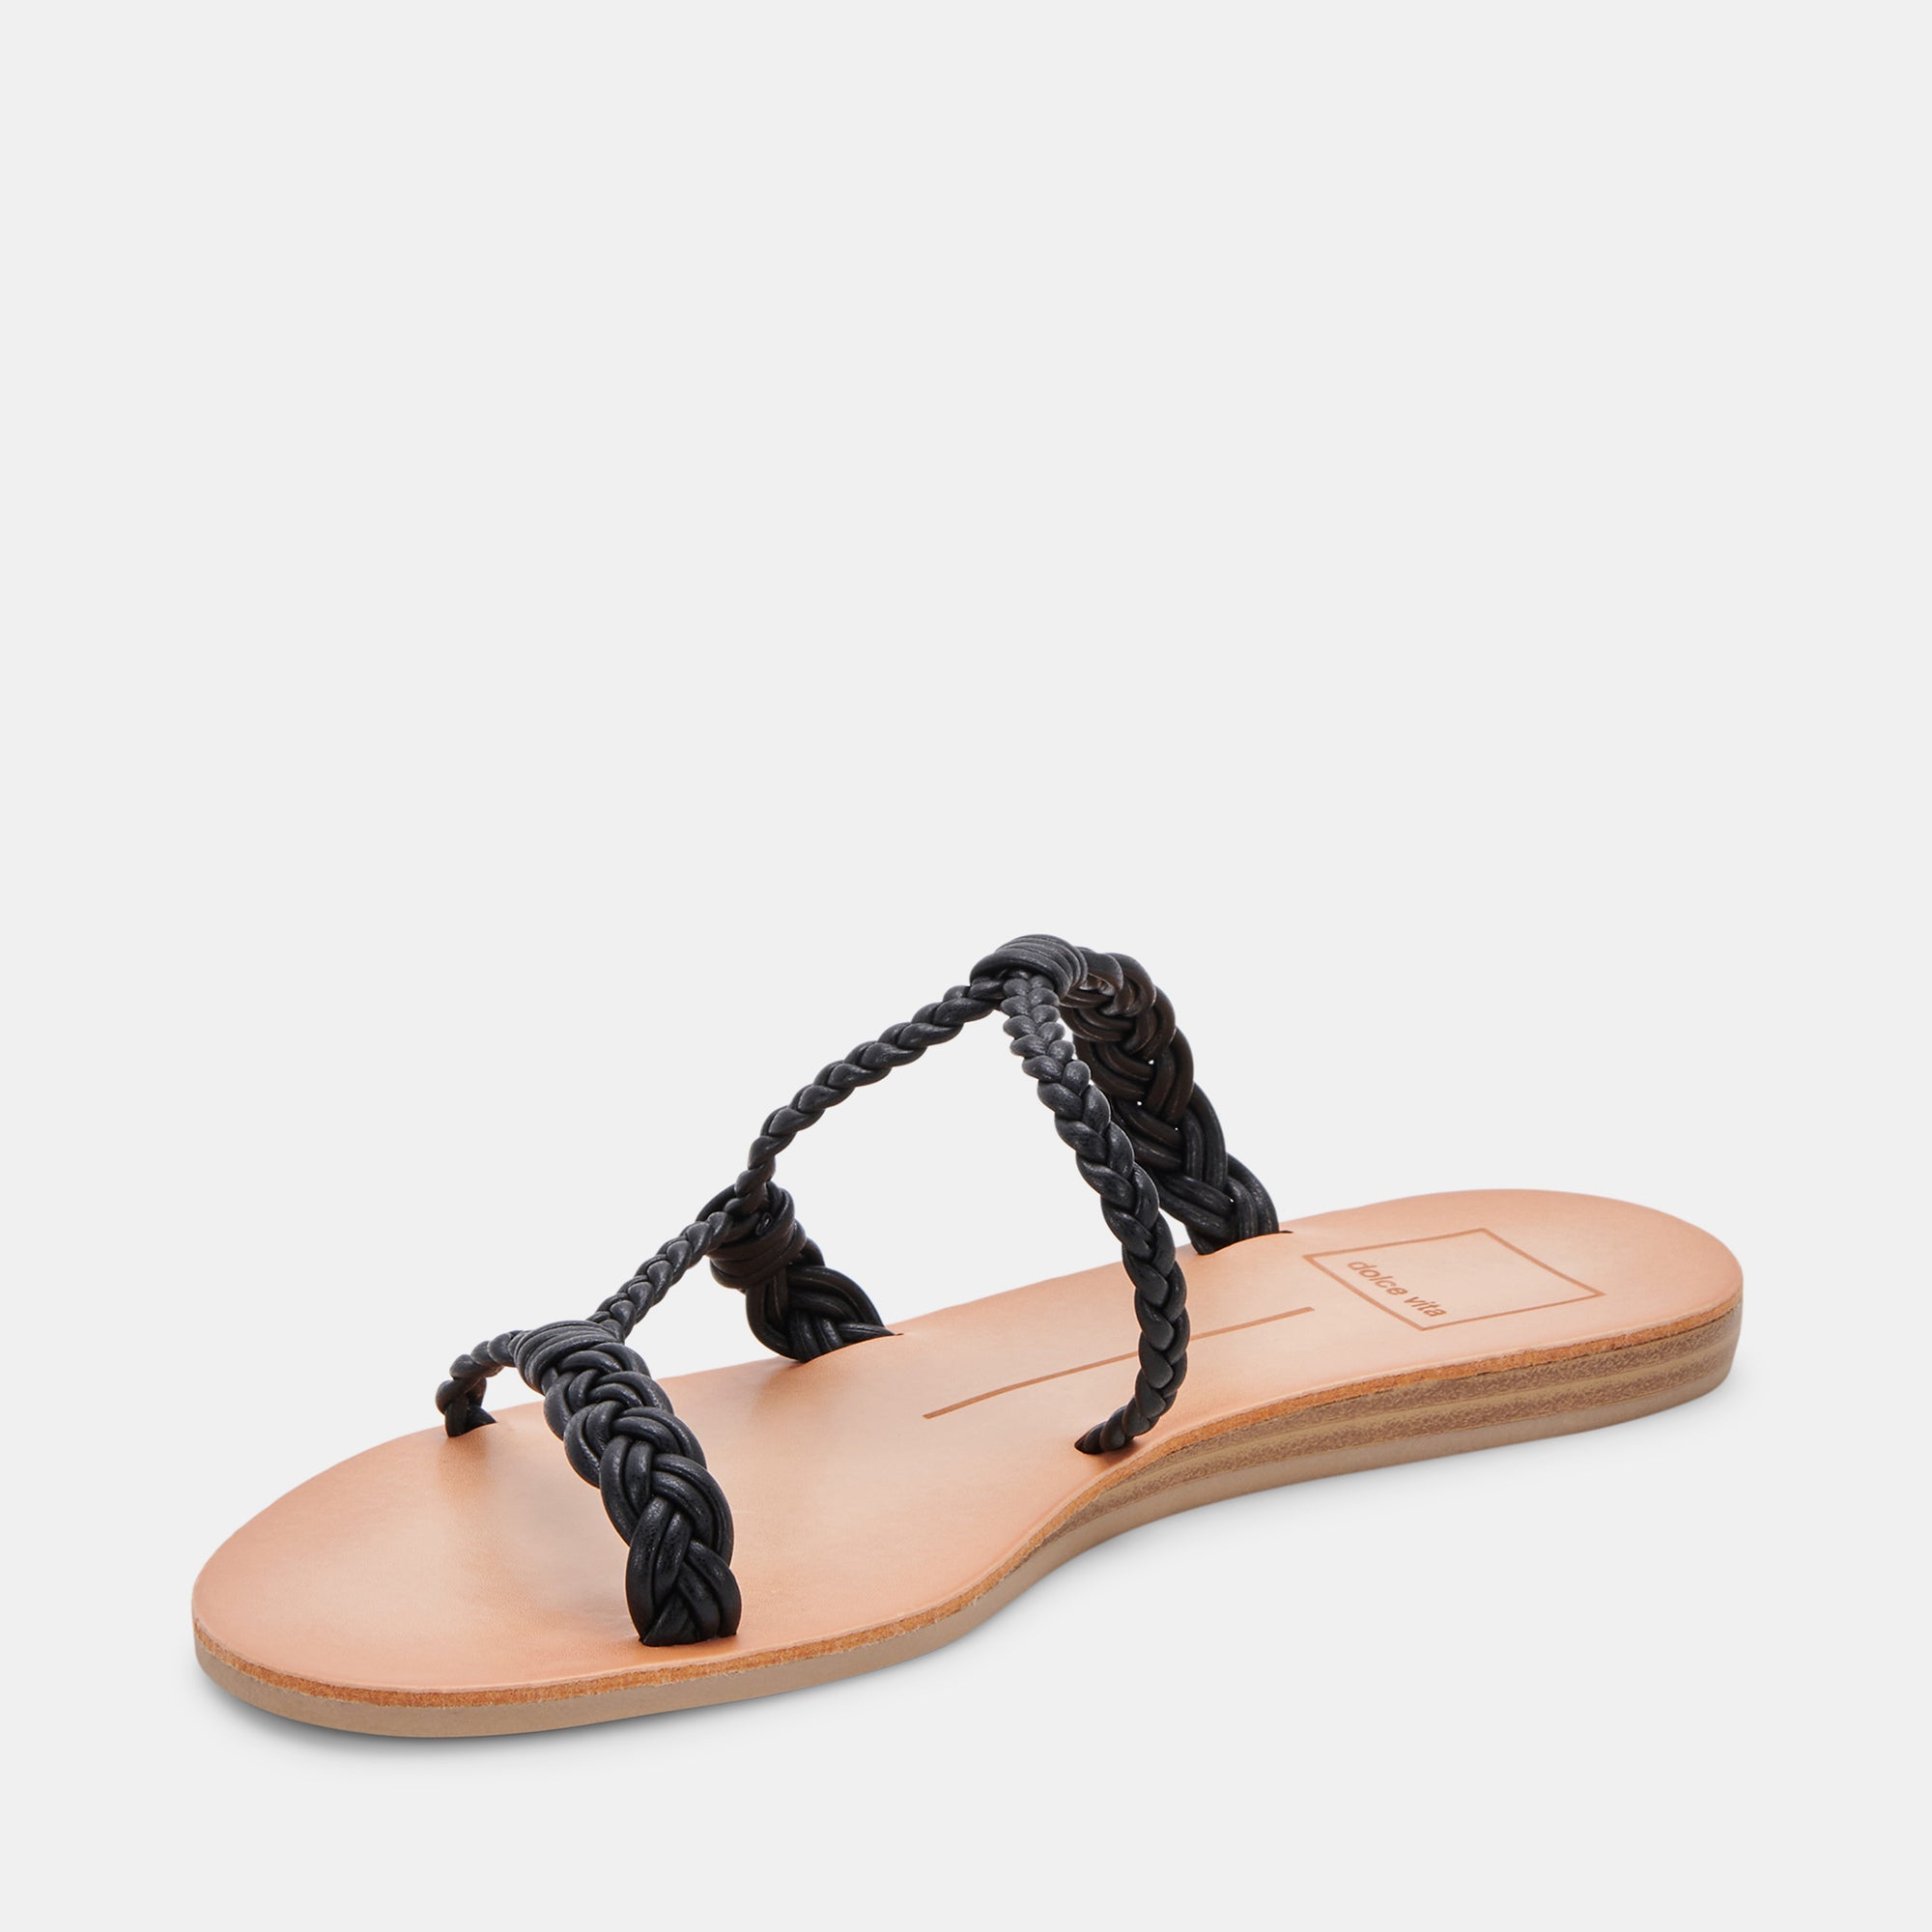 Hollister Co. Flop Sandals for Women | Mercari